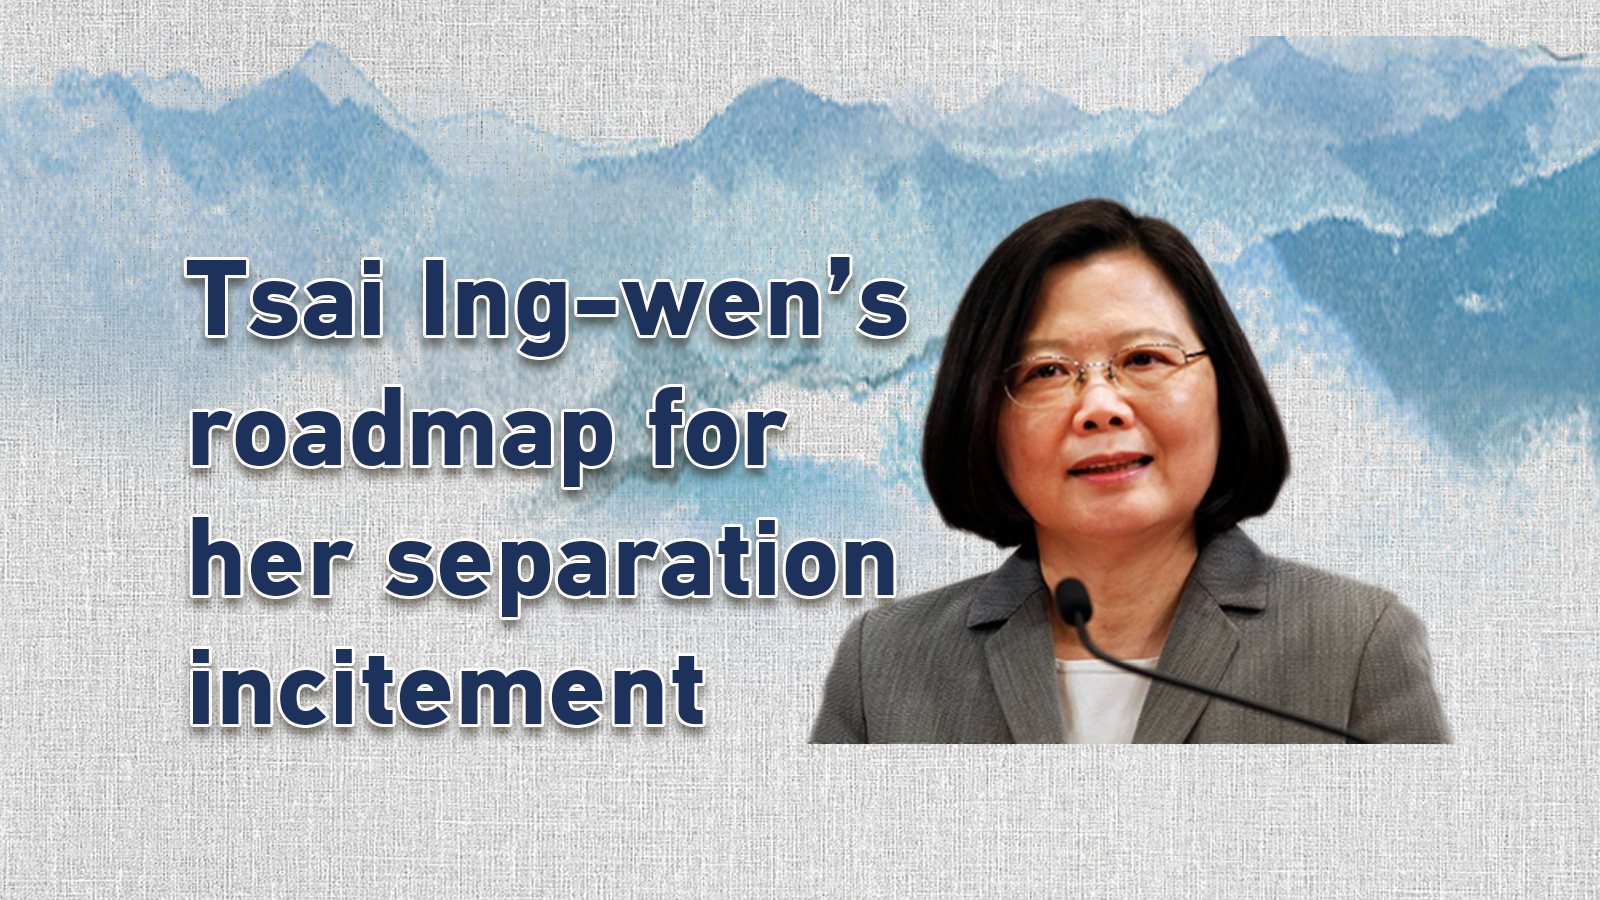 Tsai Ing-wen's roadmap for her separation incitement